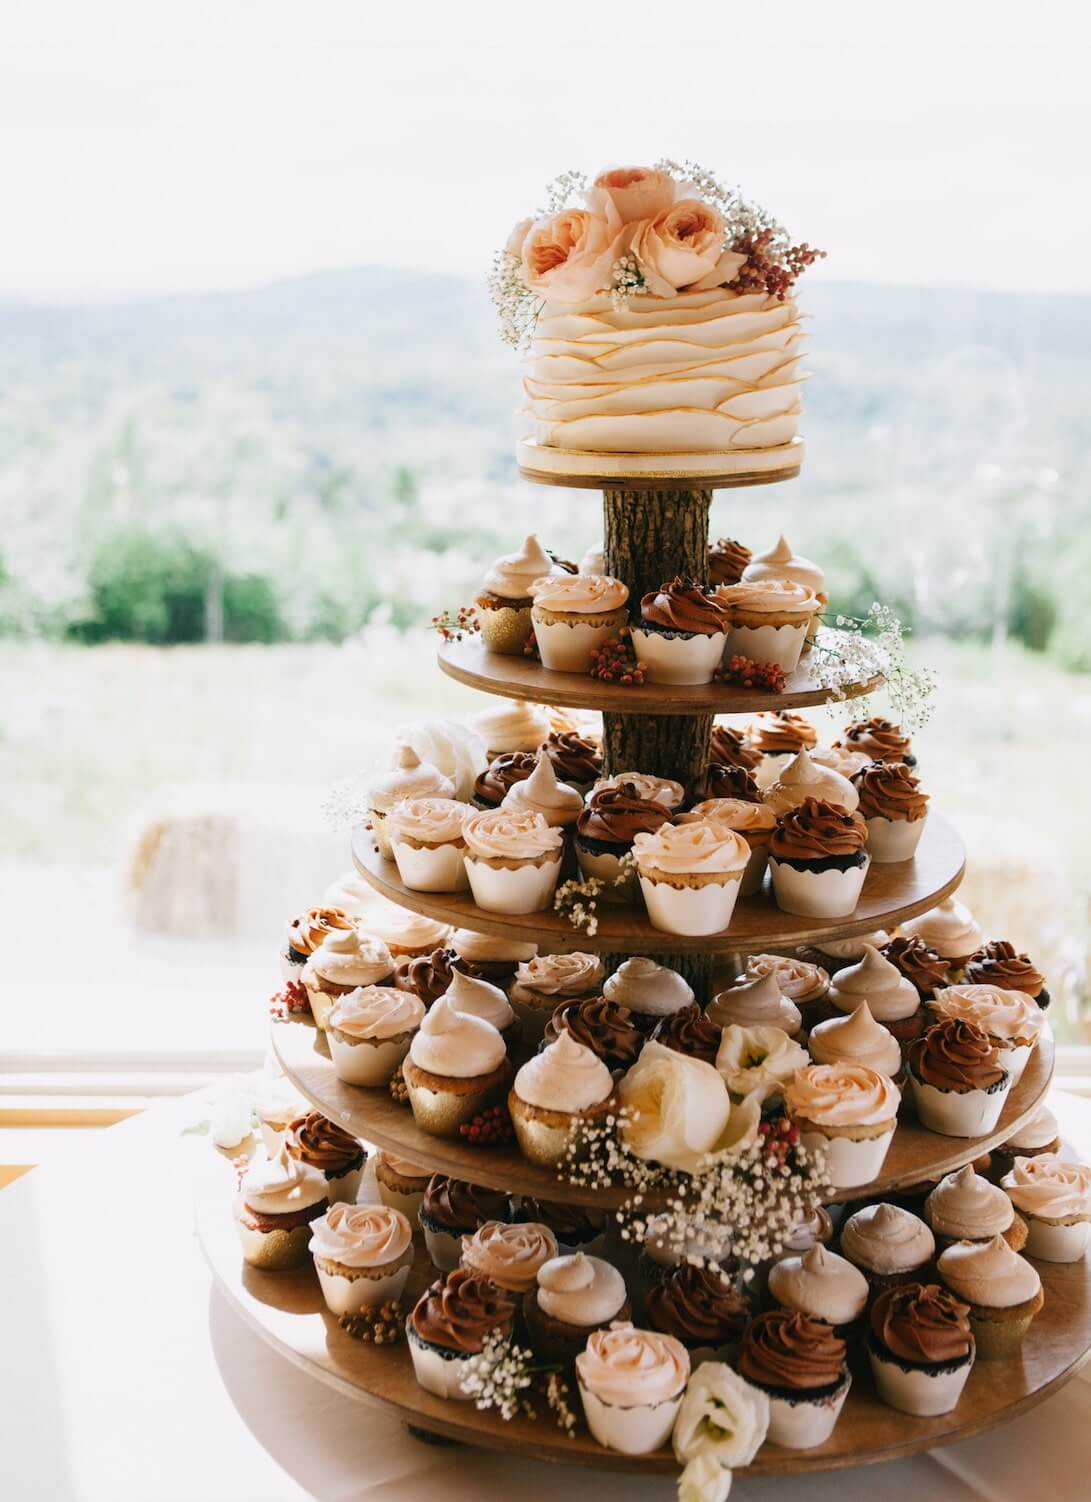 Orlando Wedding Cakes and Cupcakes